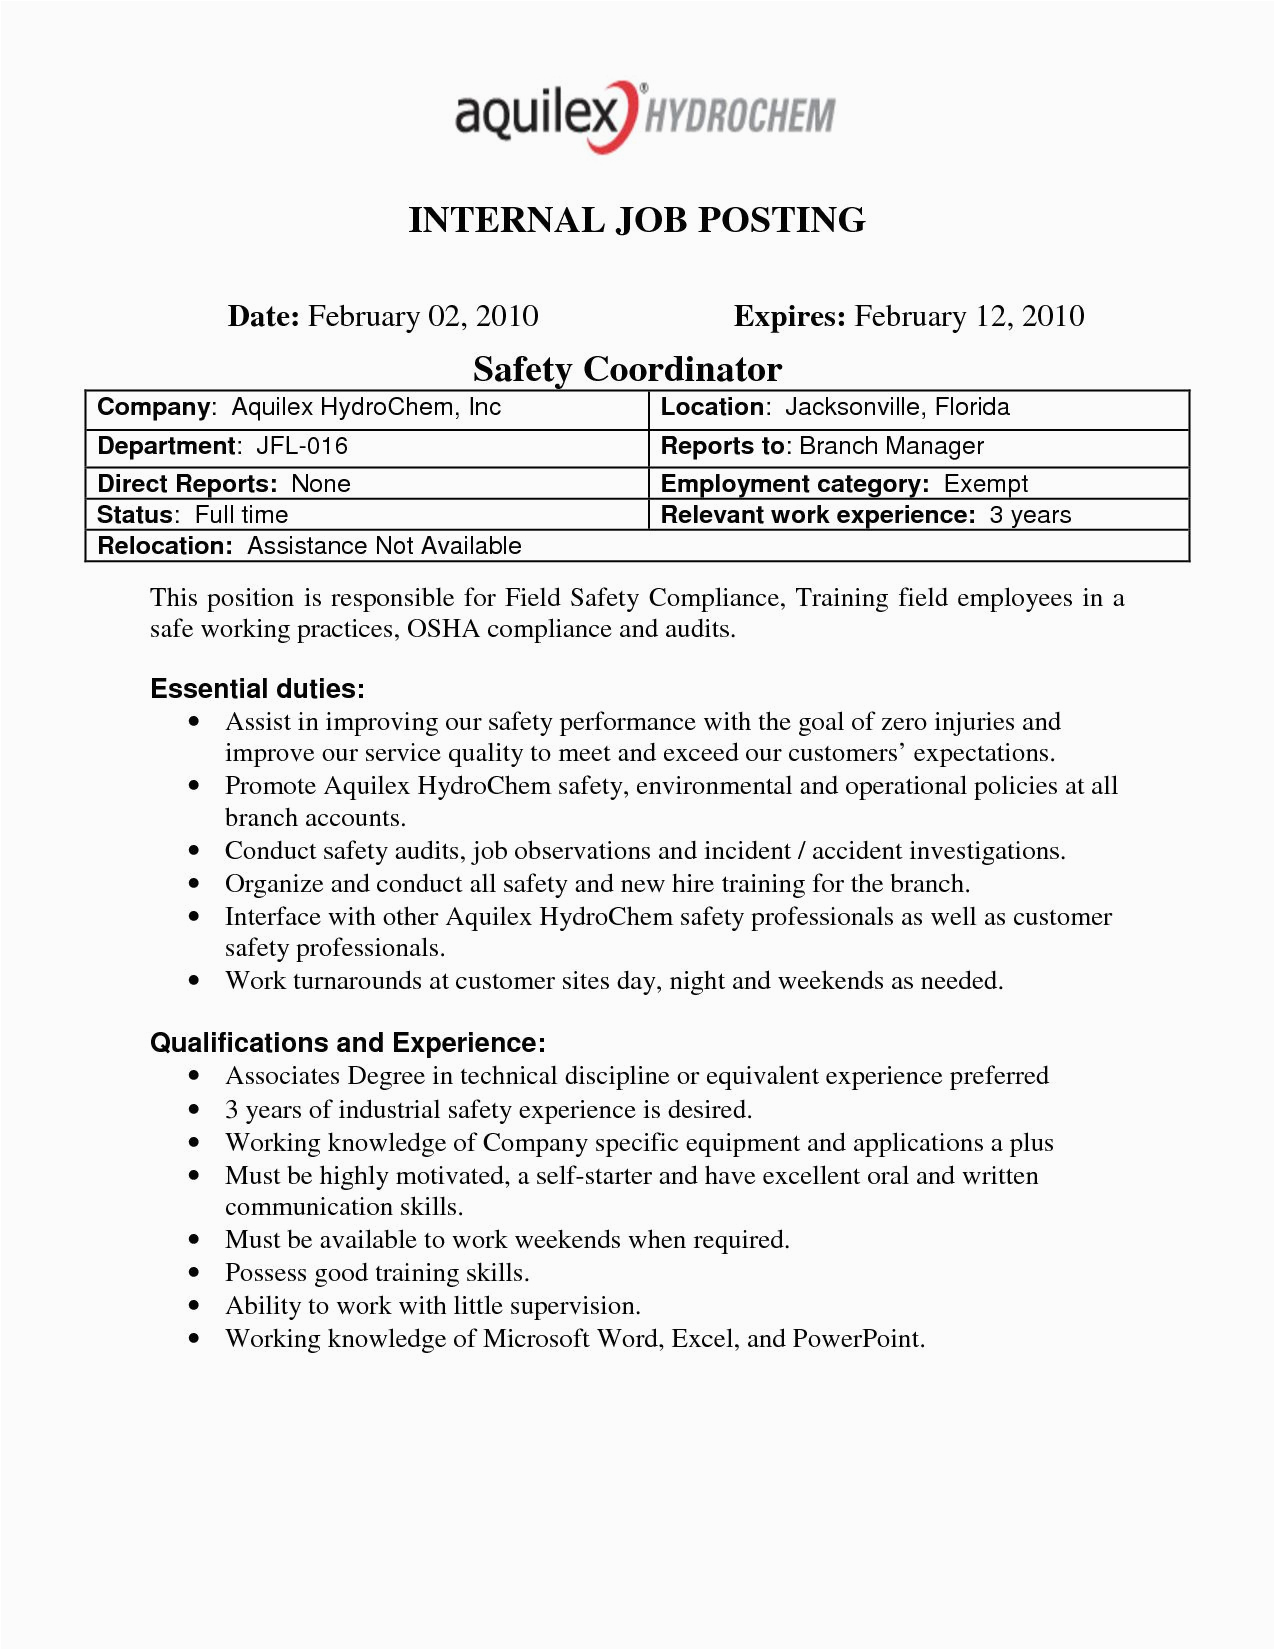 Resume Template for Internal Job Posting the Extraordinary Best S Internal Job Posting